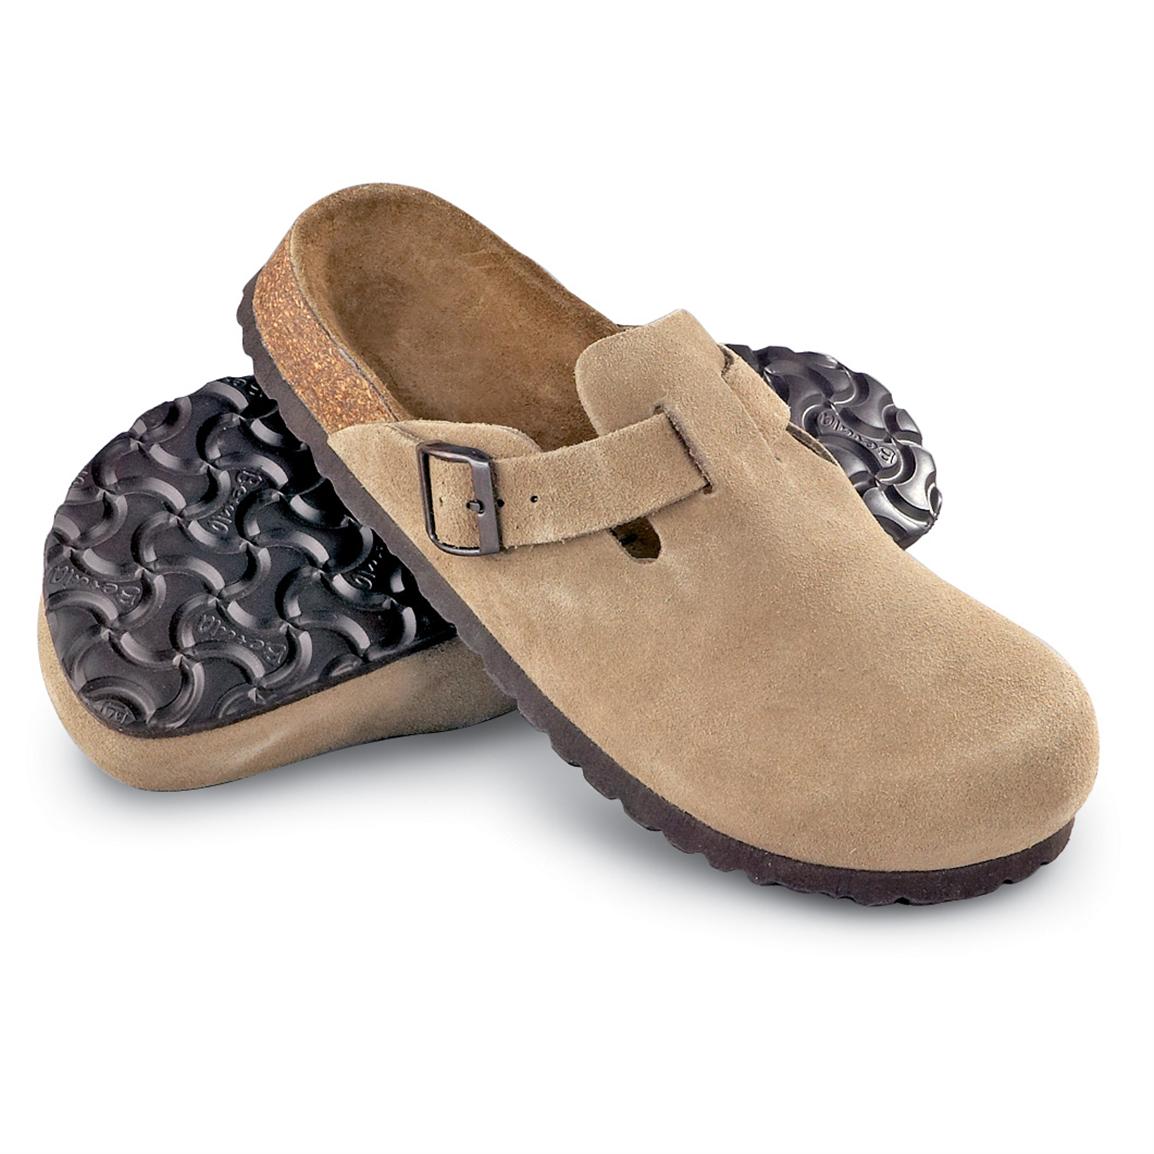 Betula® Clogs, Taupe - 91371, Sandals 